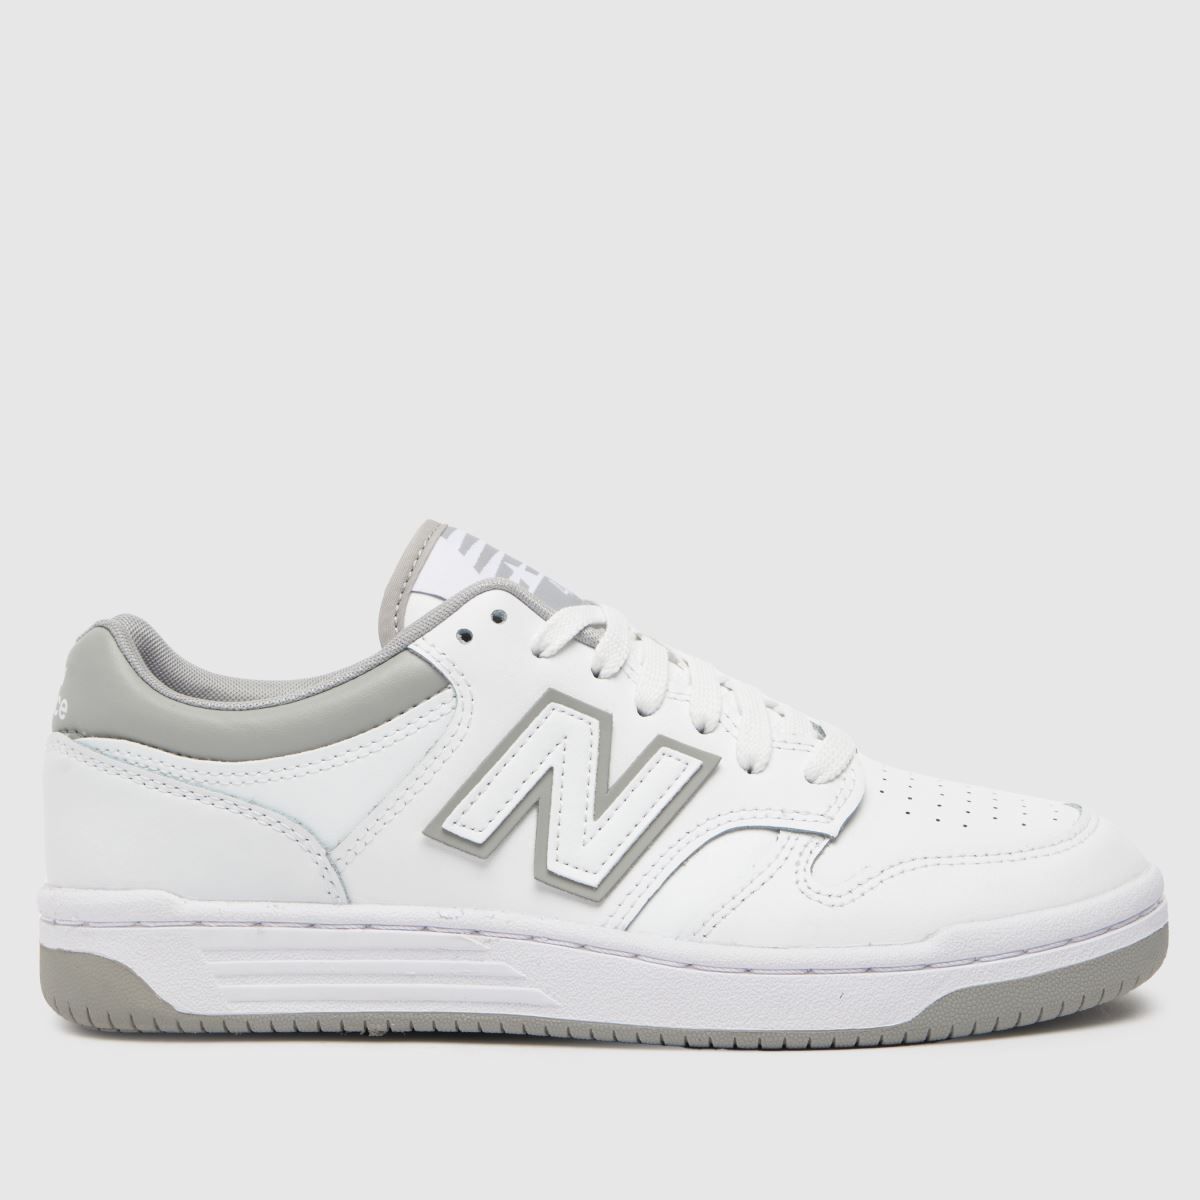 New Balance nb 480 in white & grey | Schuh